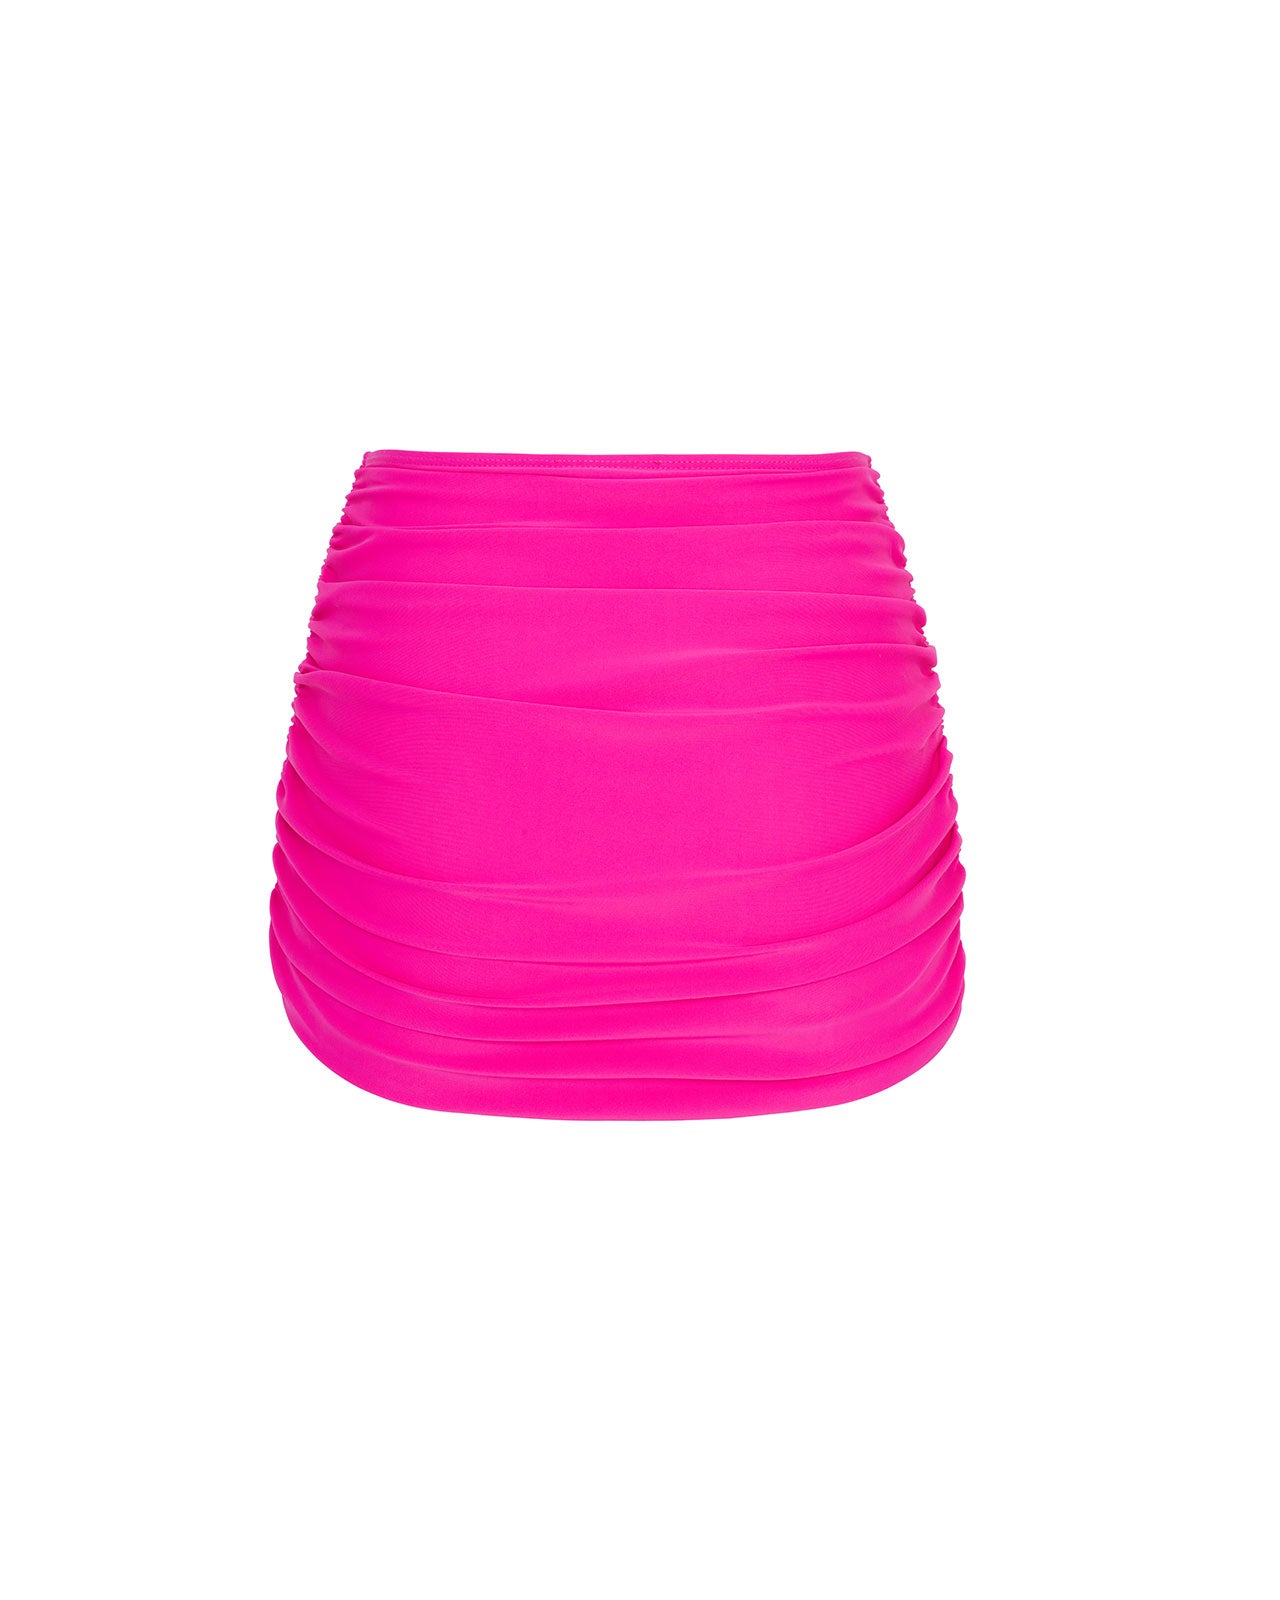 Brandon Blackwood New York - Ruched Swim Skirt - Hot Pink